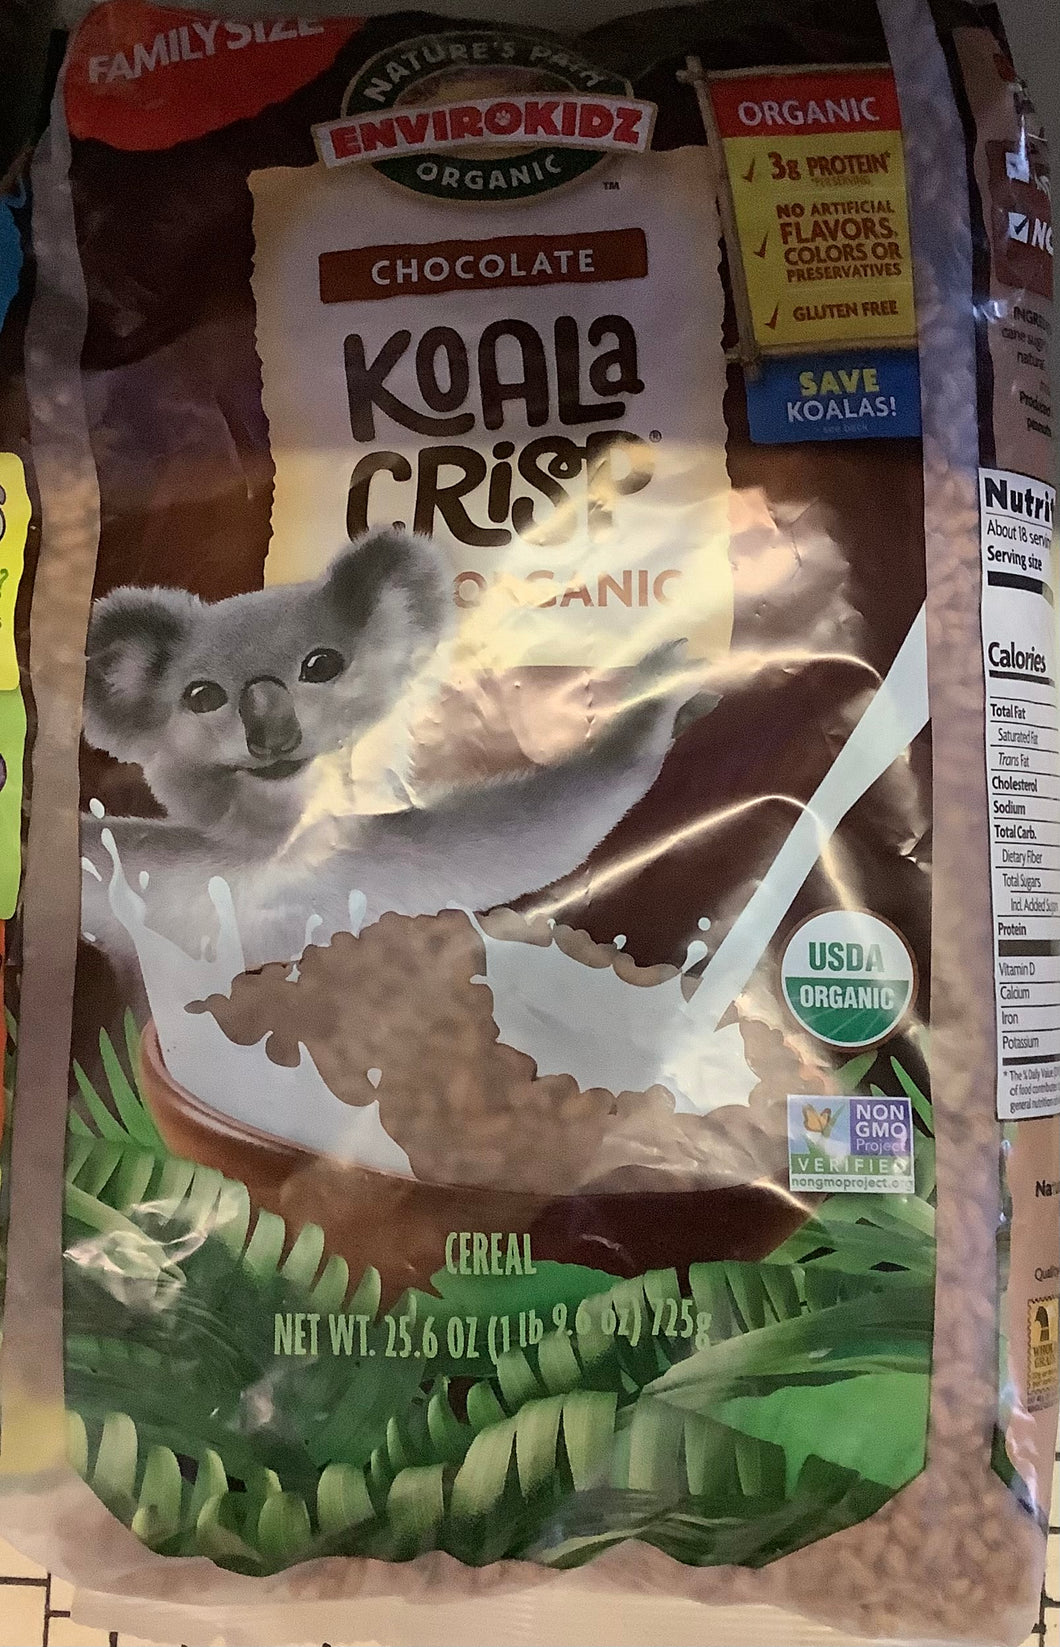 Cereal, Chocolate Koala Crisp, Organic, Gluten Free, Nature's Path Envirokidz